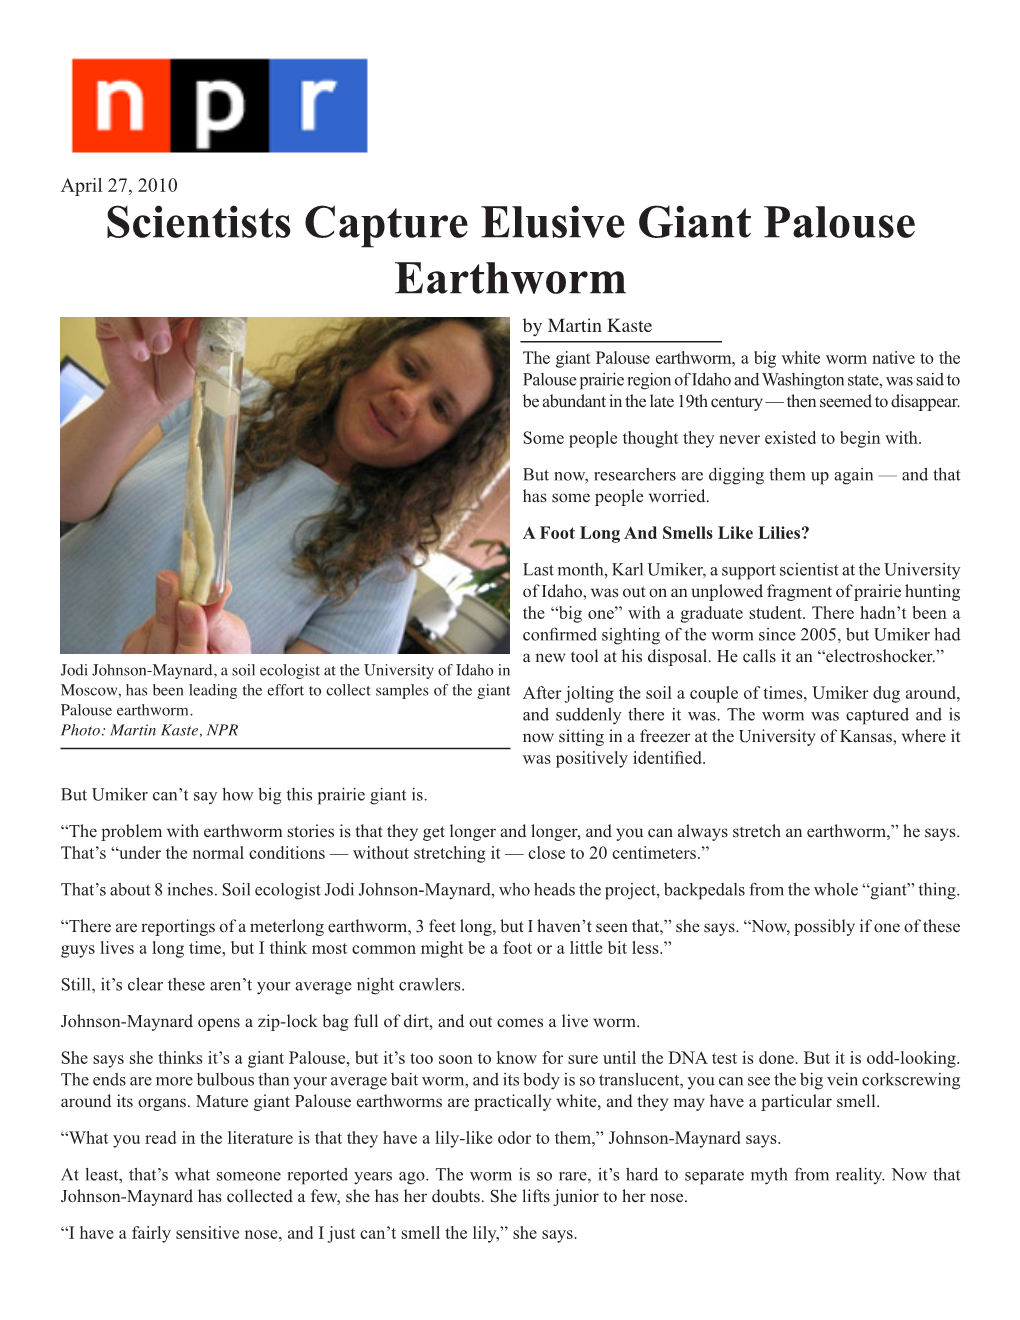 Scientists Capture Elusive Giant Palouse Earthworm